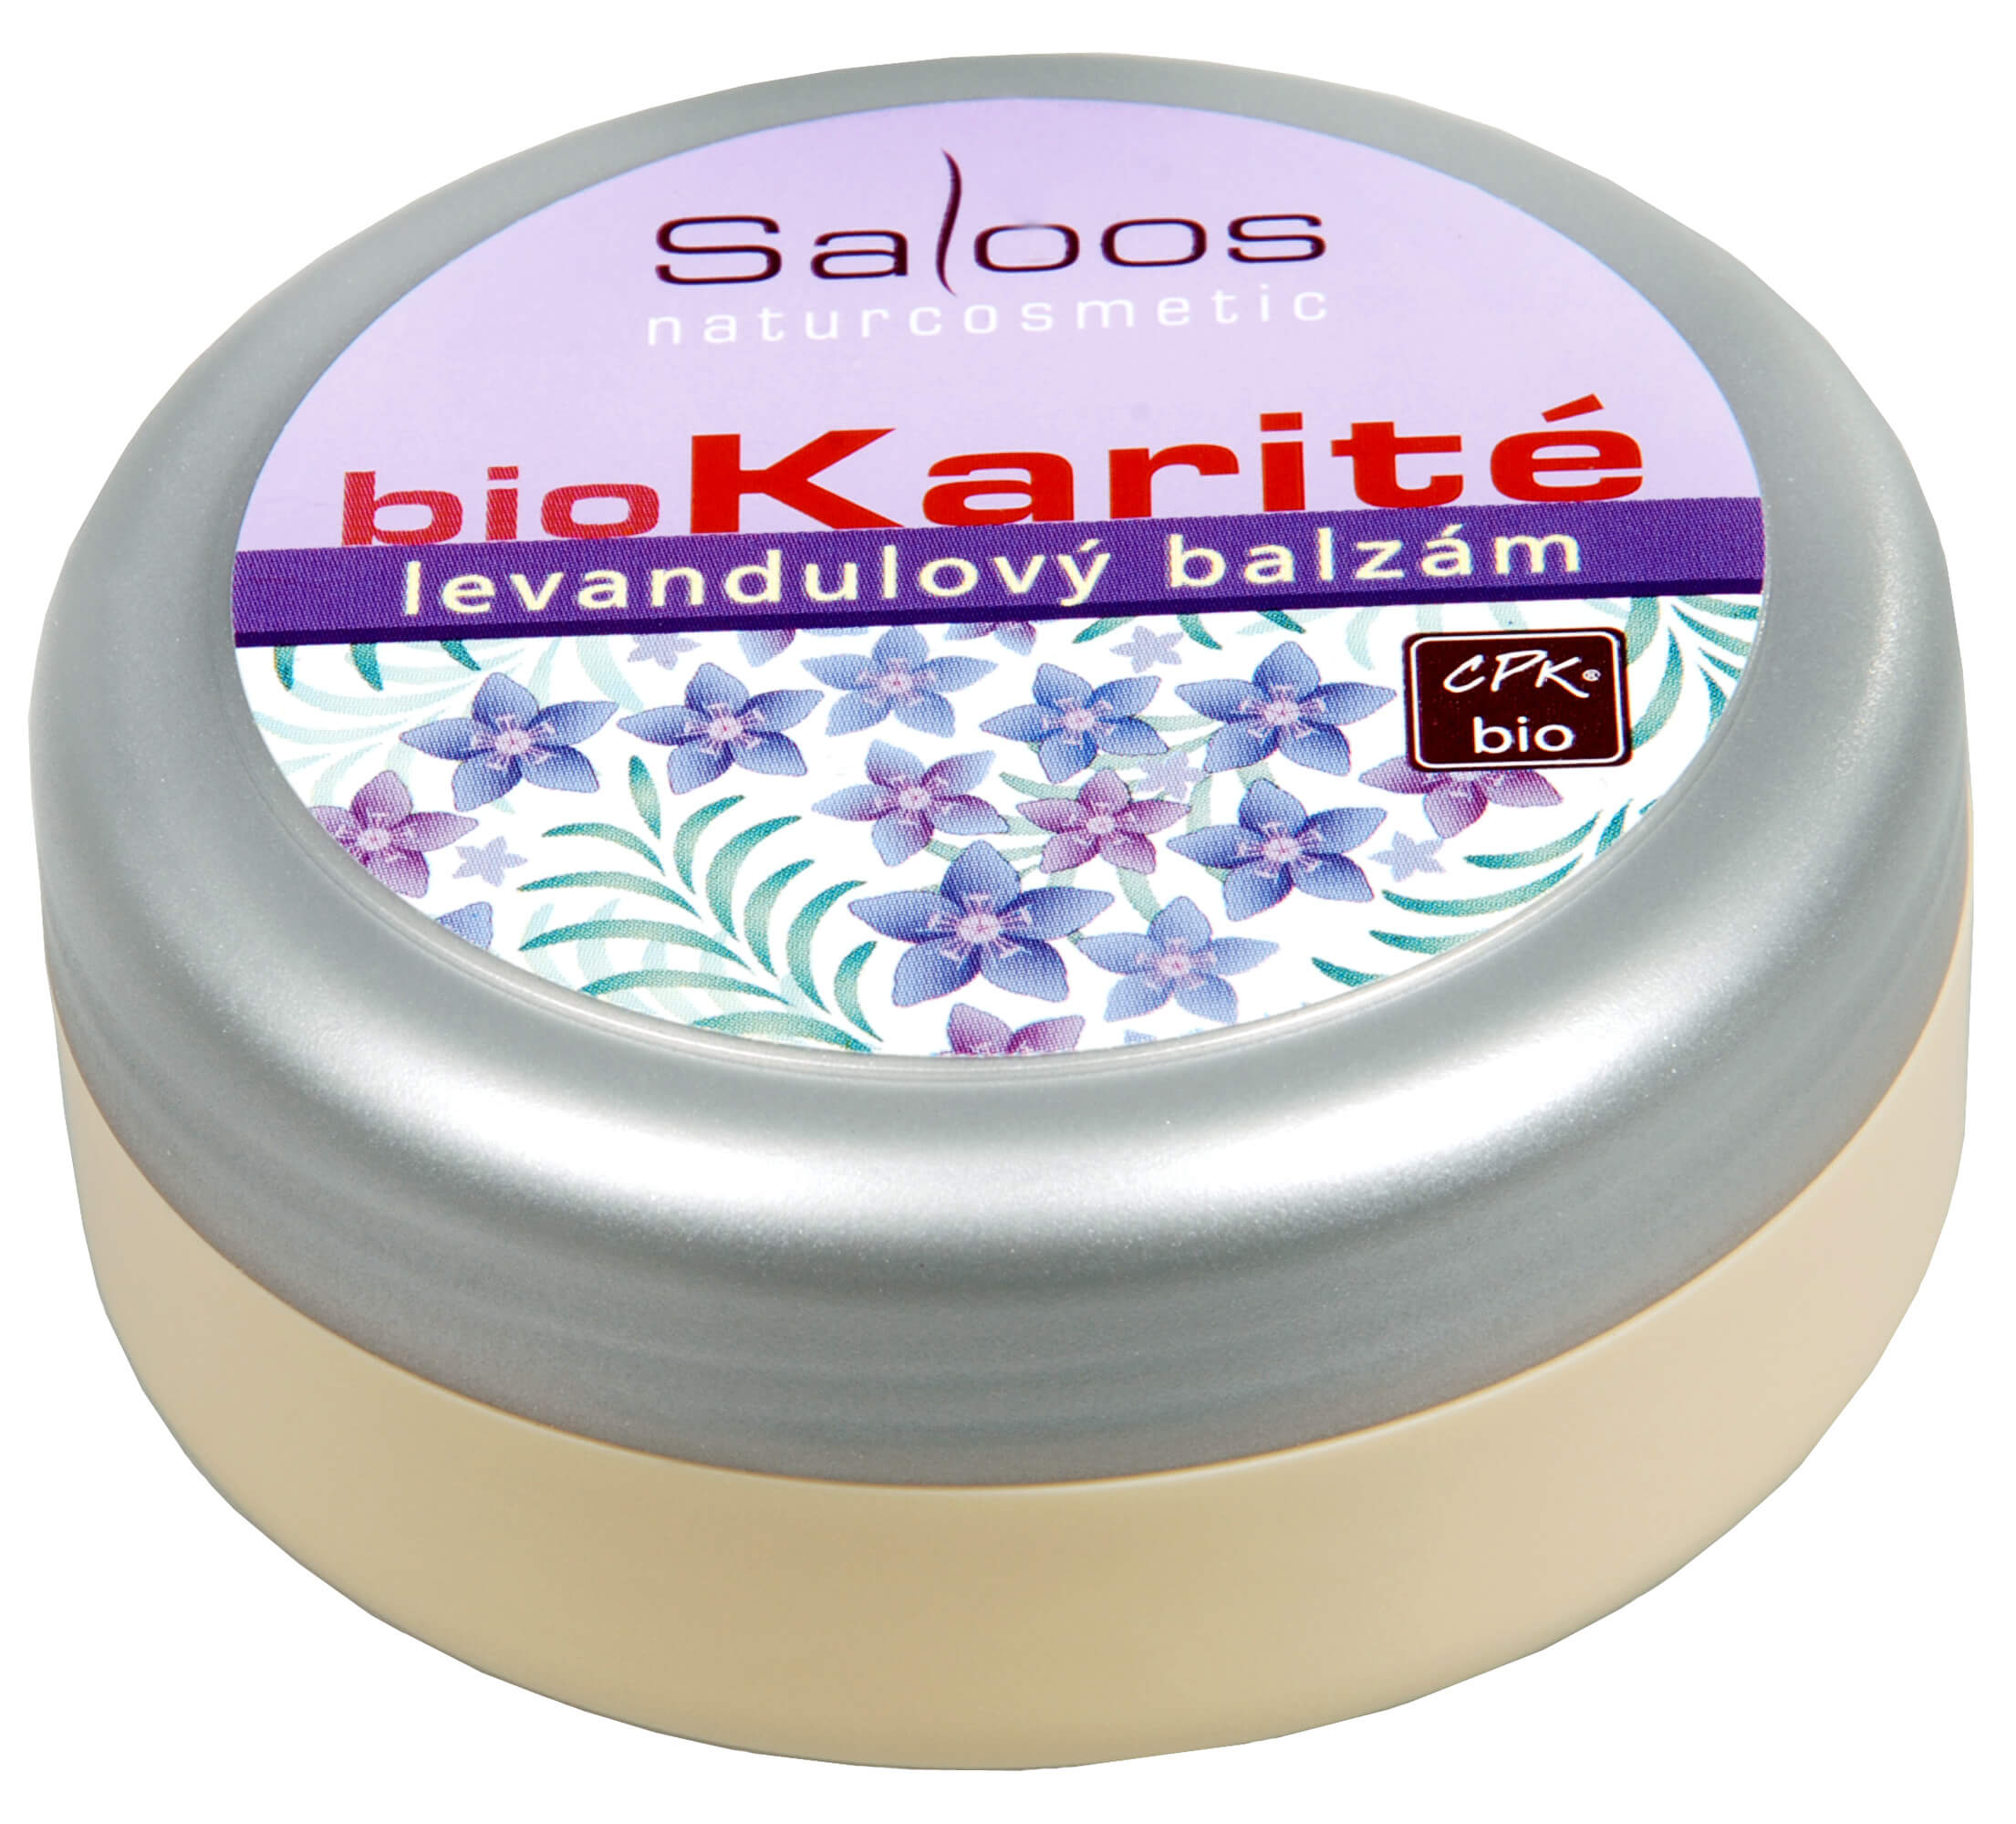 Zobrazit detail výrobku Saloos Bio Karité balzám - Levandulový 50 ml